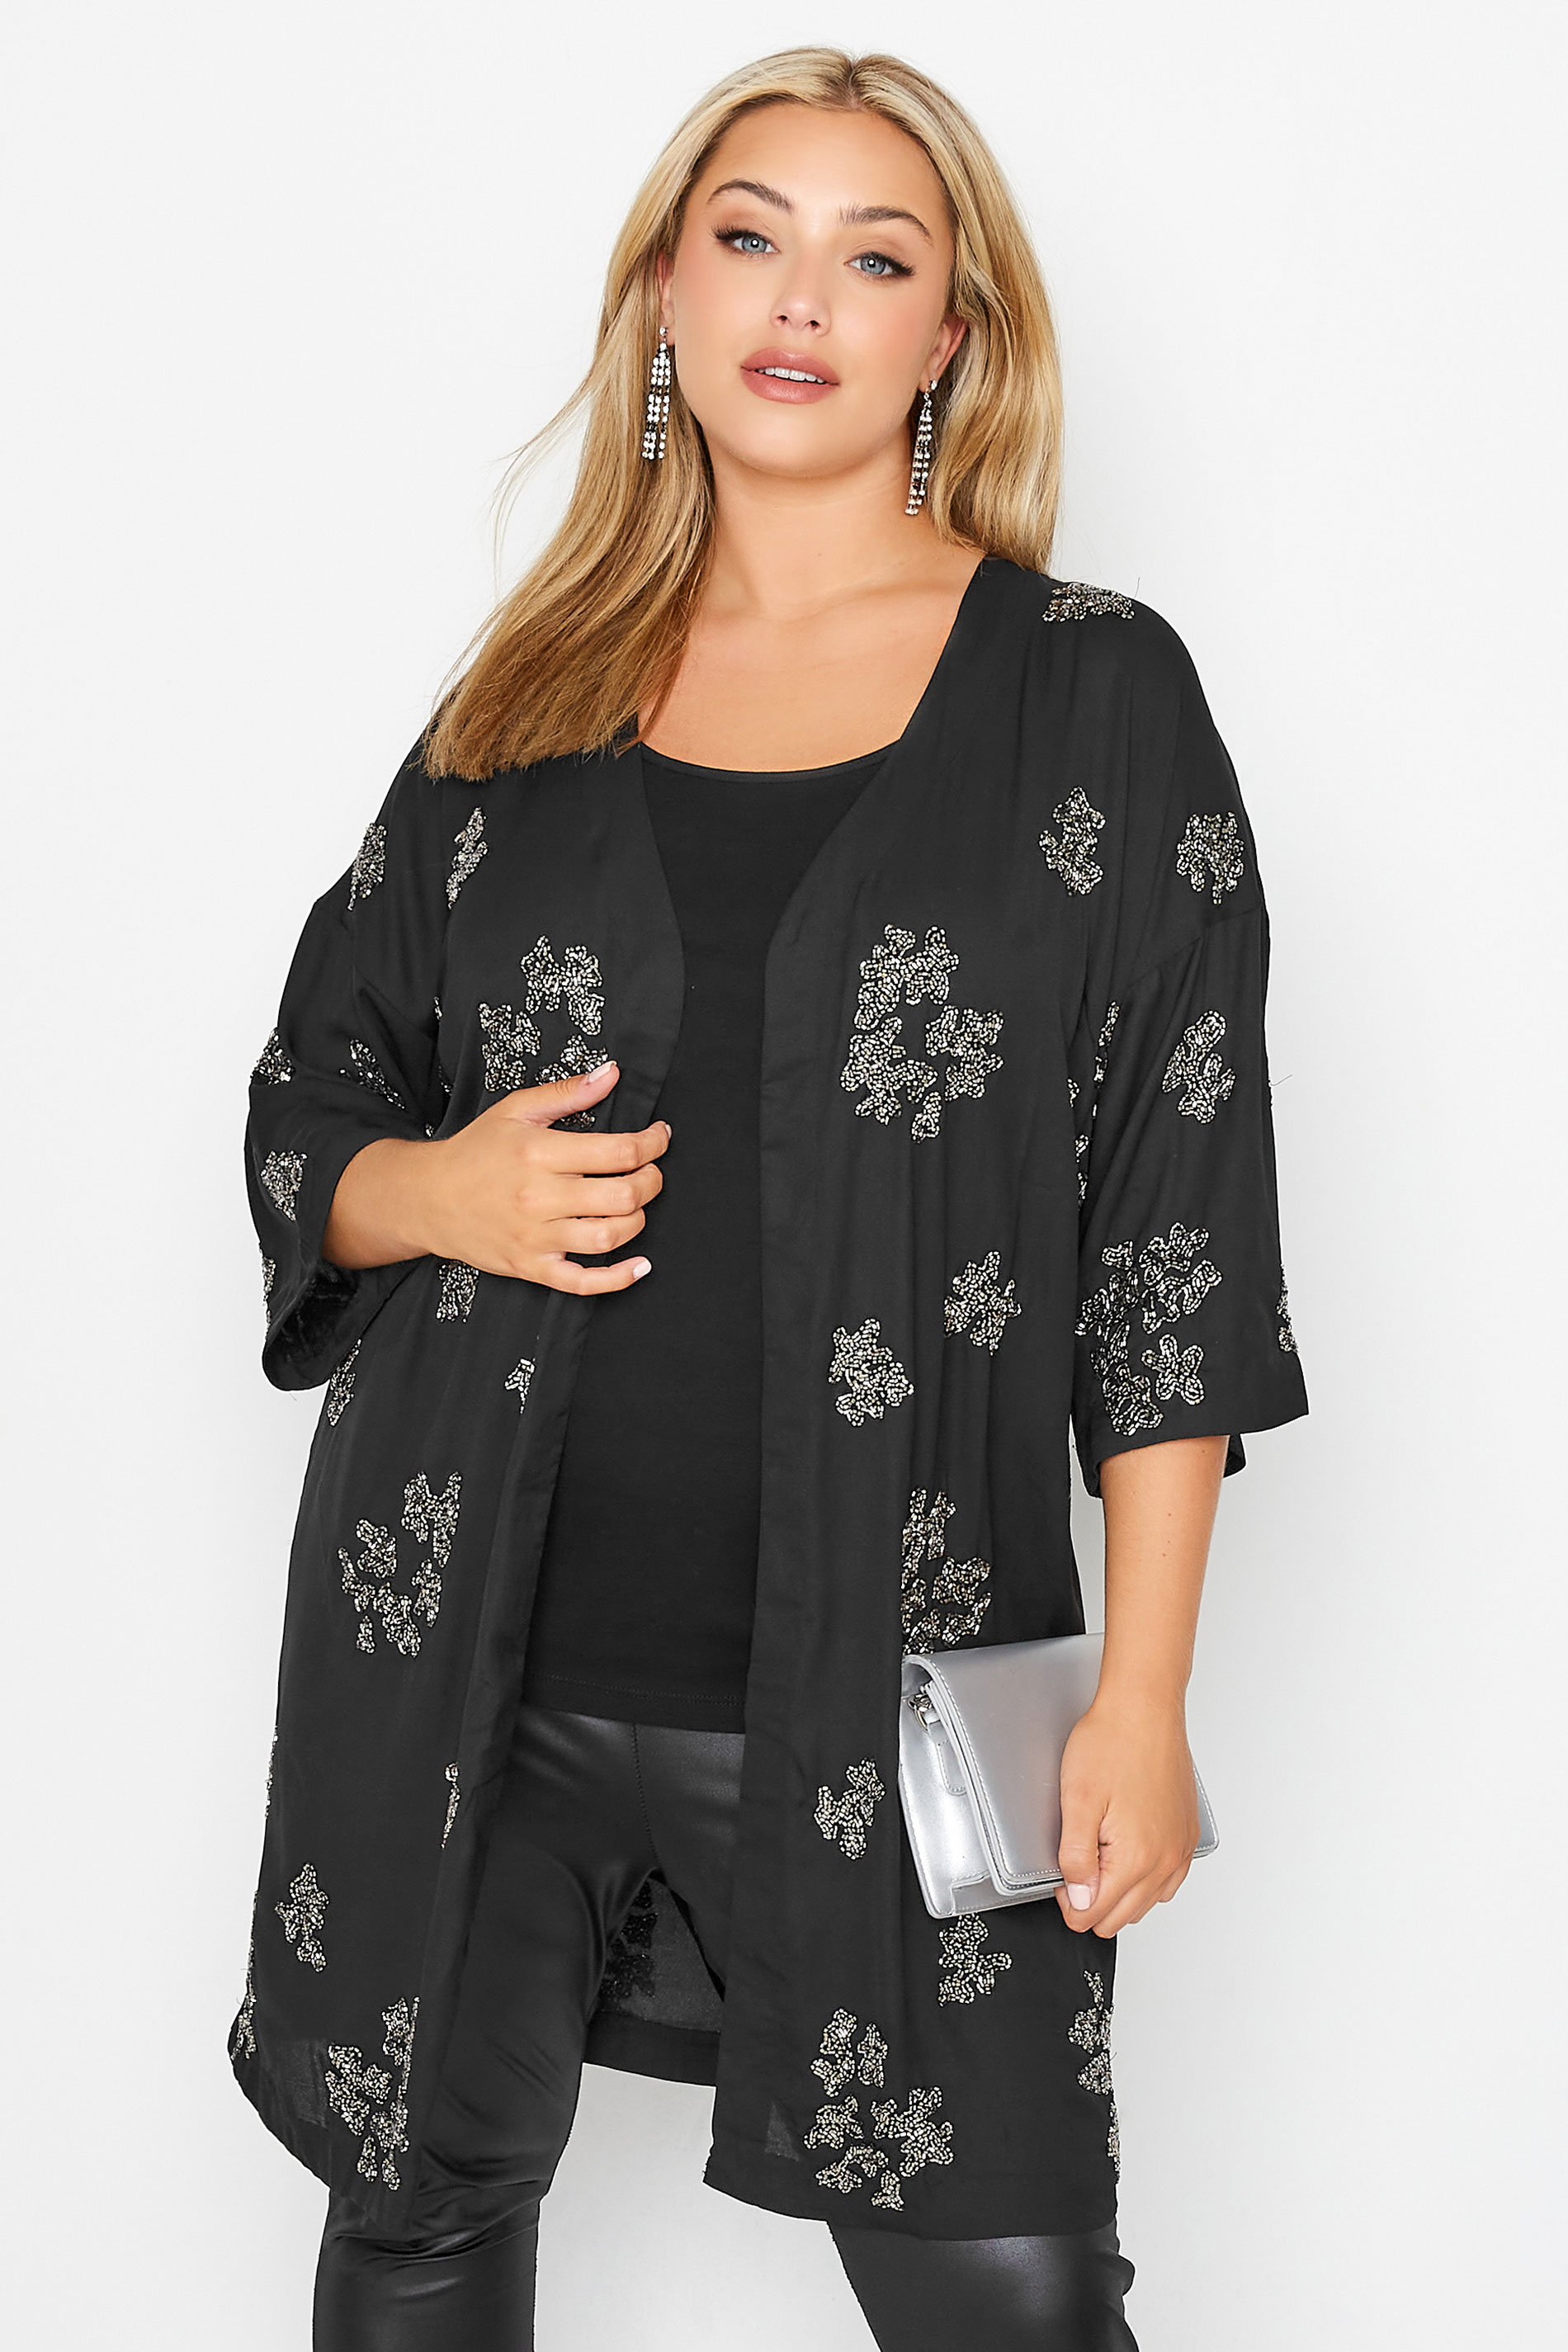 LUXE Plus Size Black Hand Embellished Kimono | Yours Clothing 1